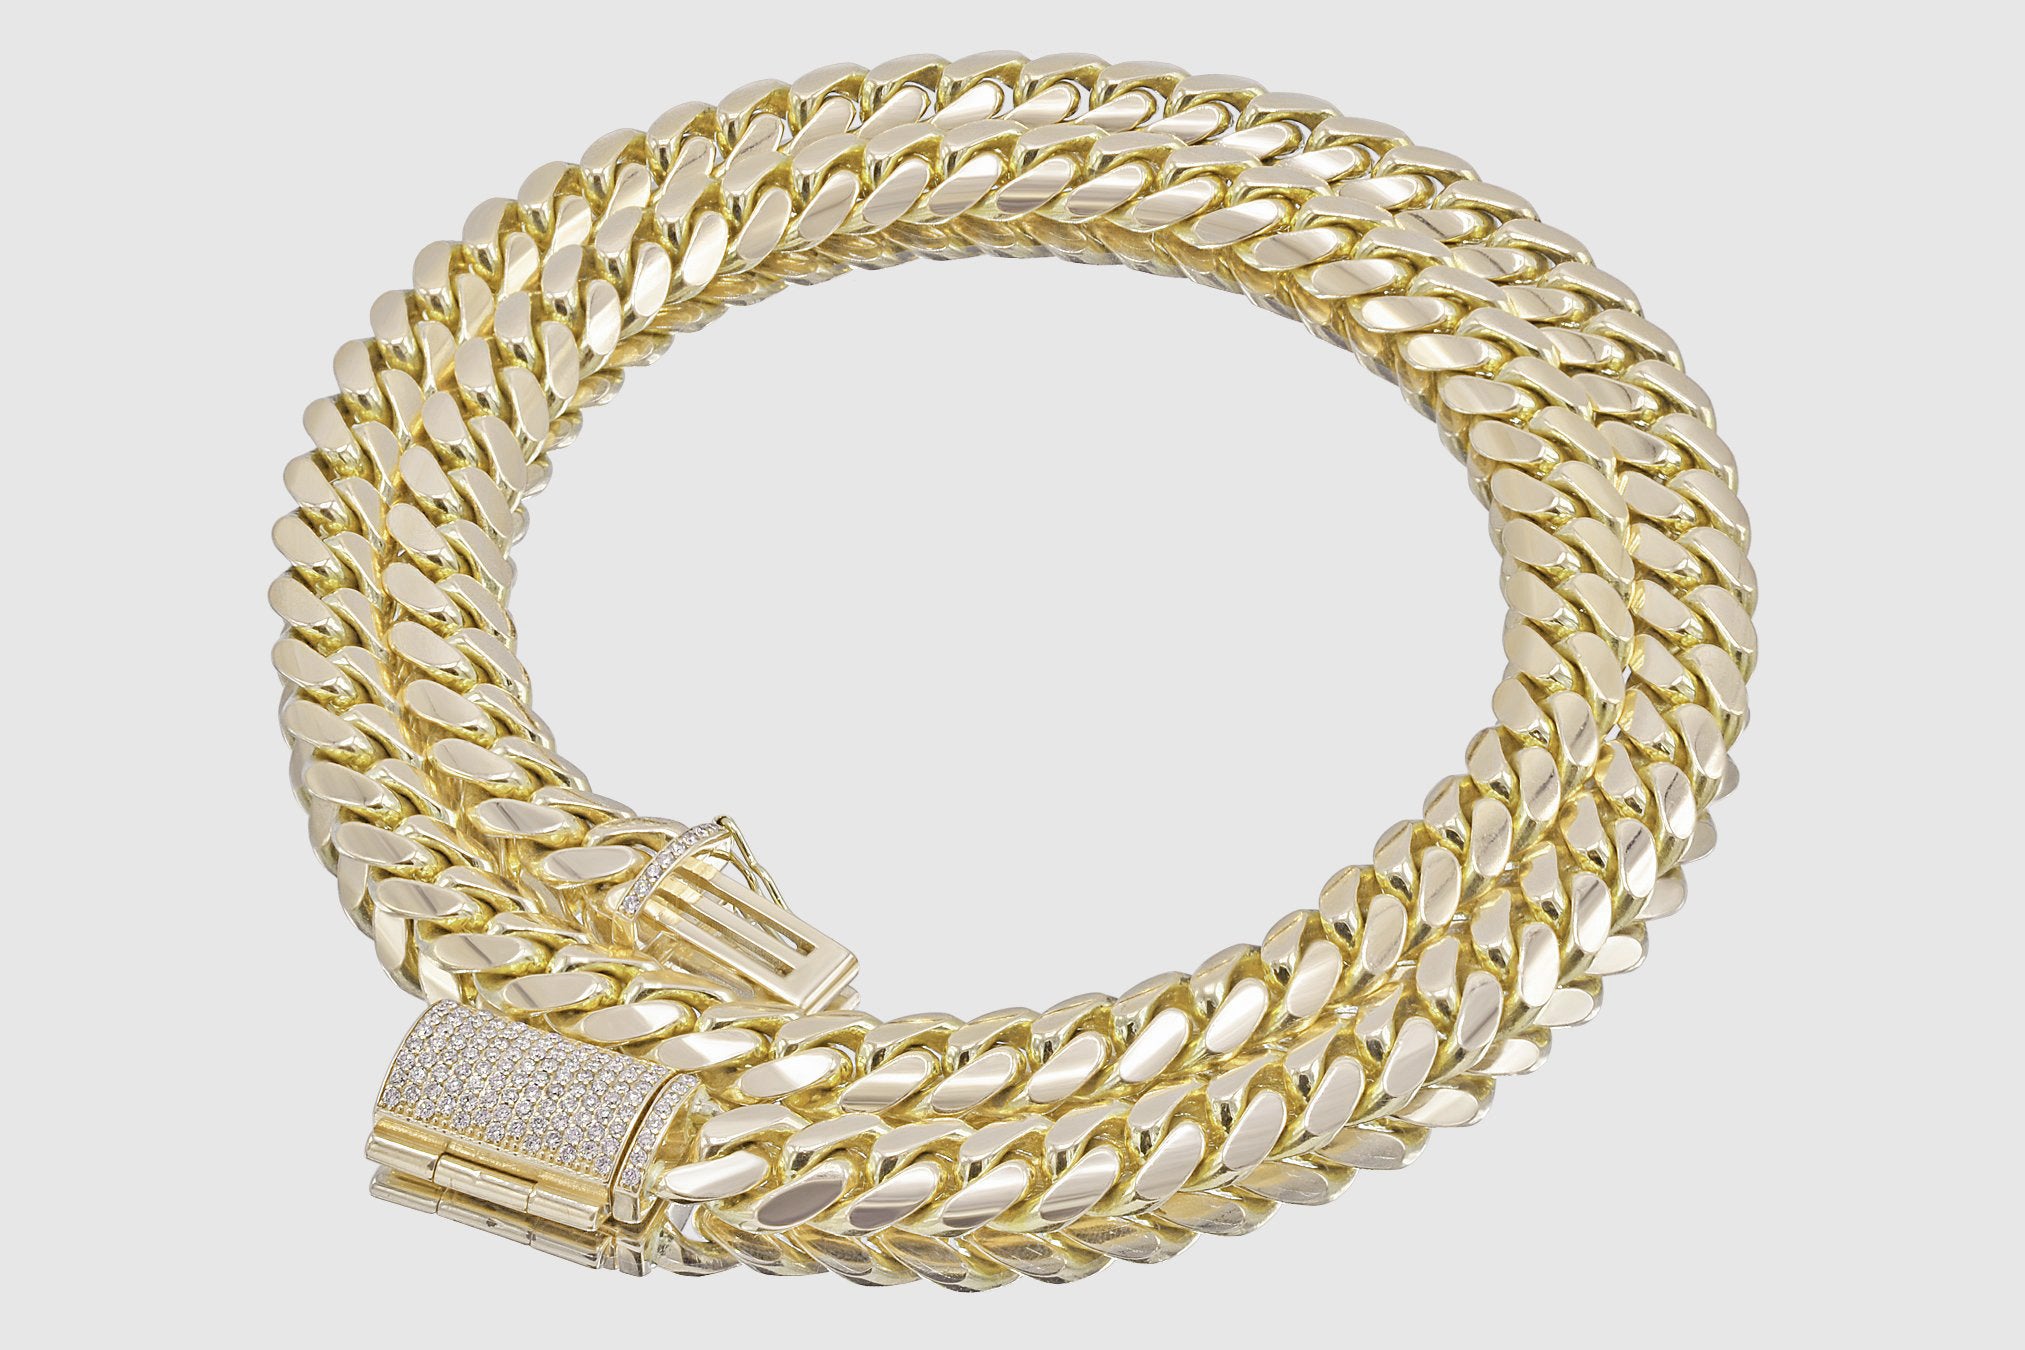 Yellow or White Gold Diamond Padlock Necklace